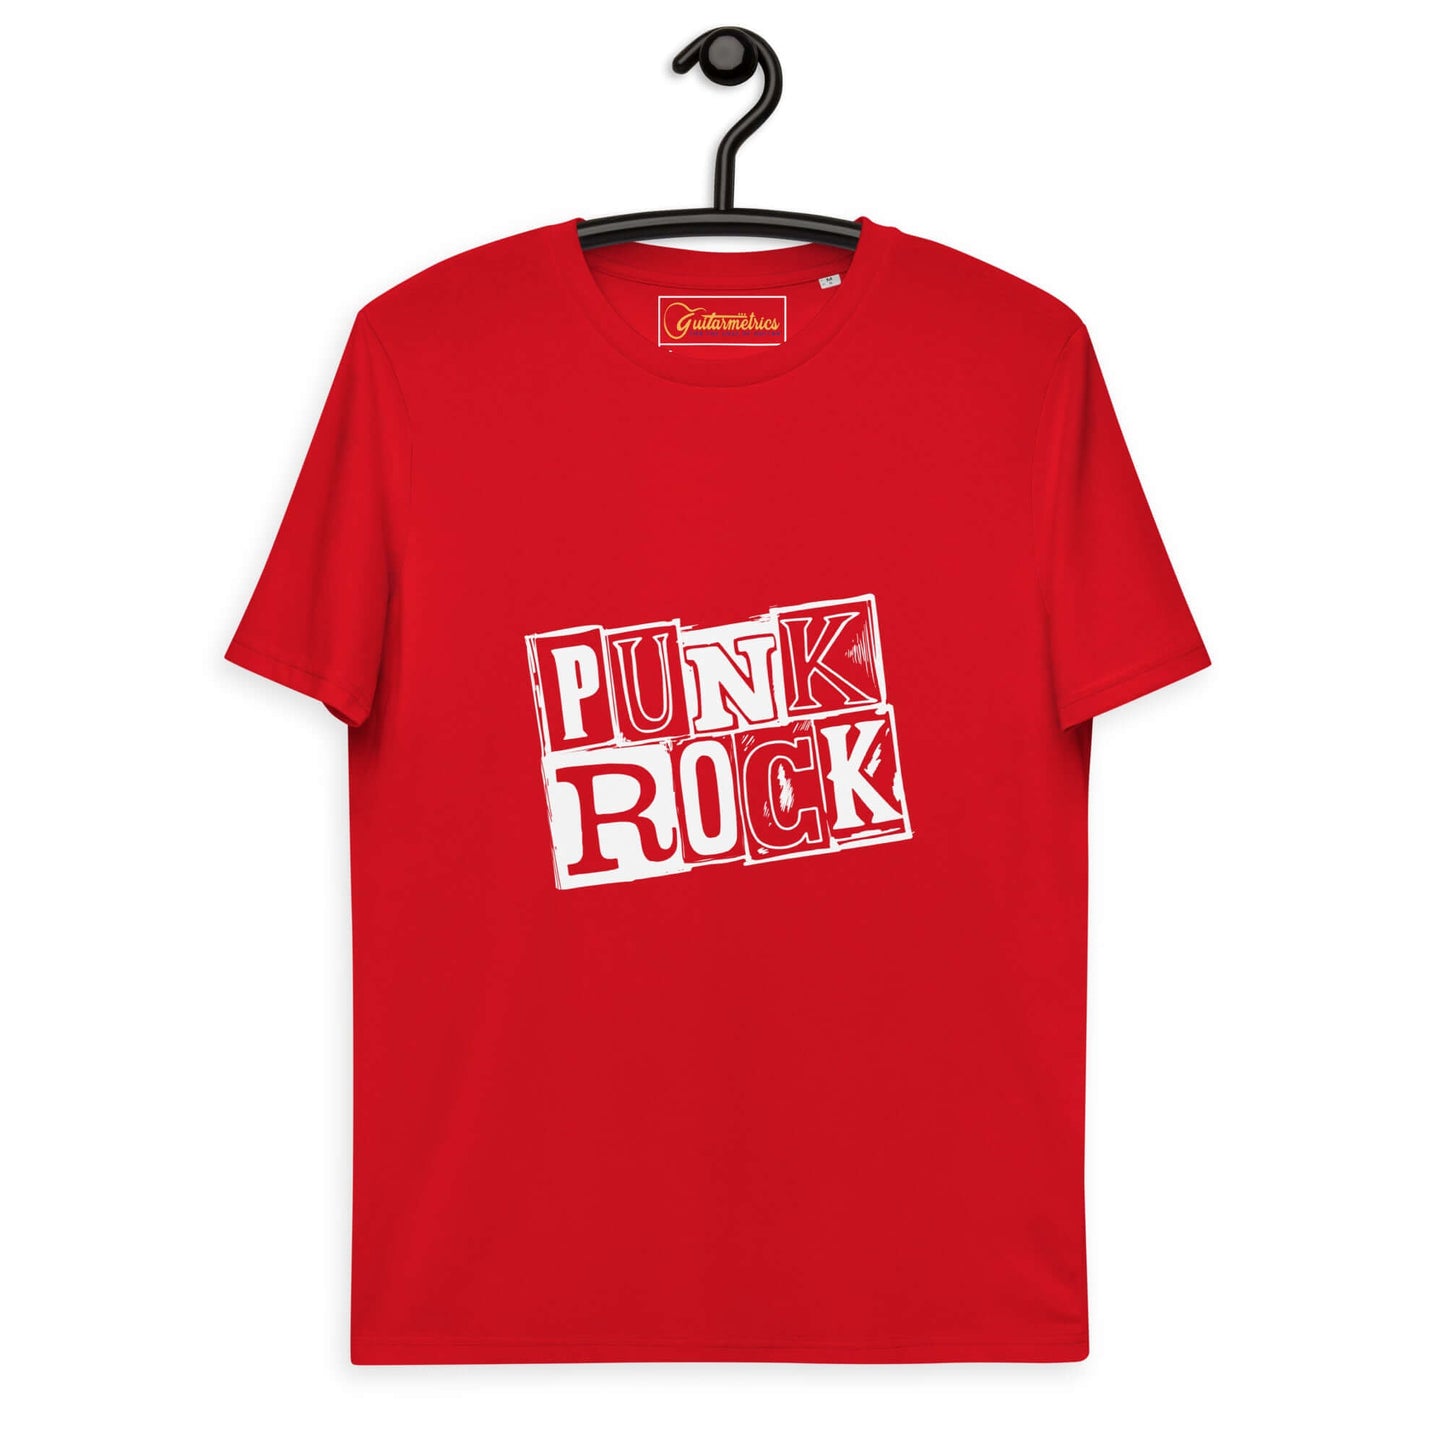 Punk Rock Unisex organic cotton t-shirt Red guitarmetrics